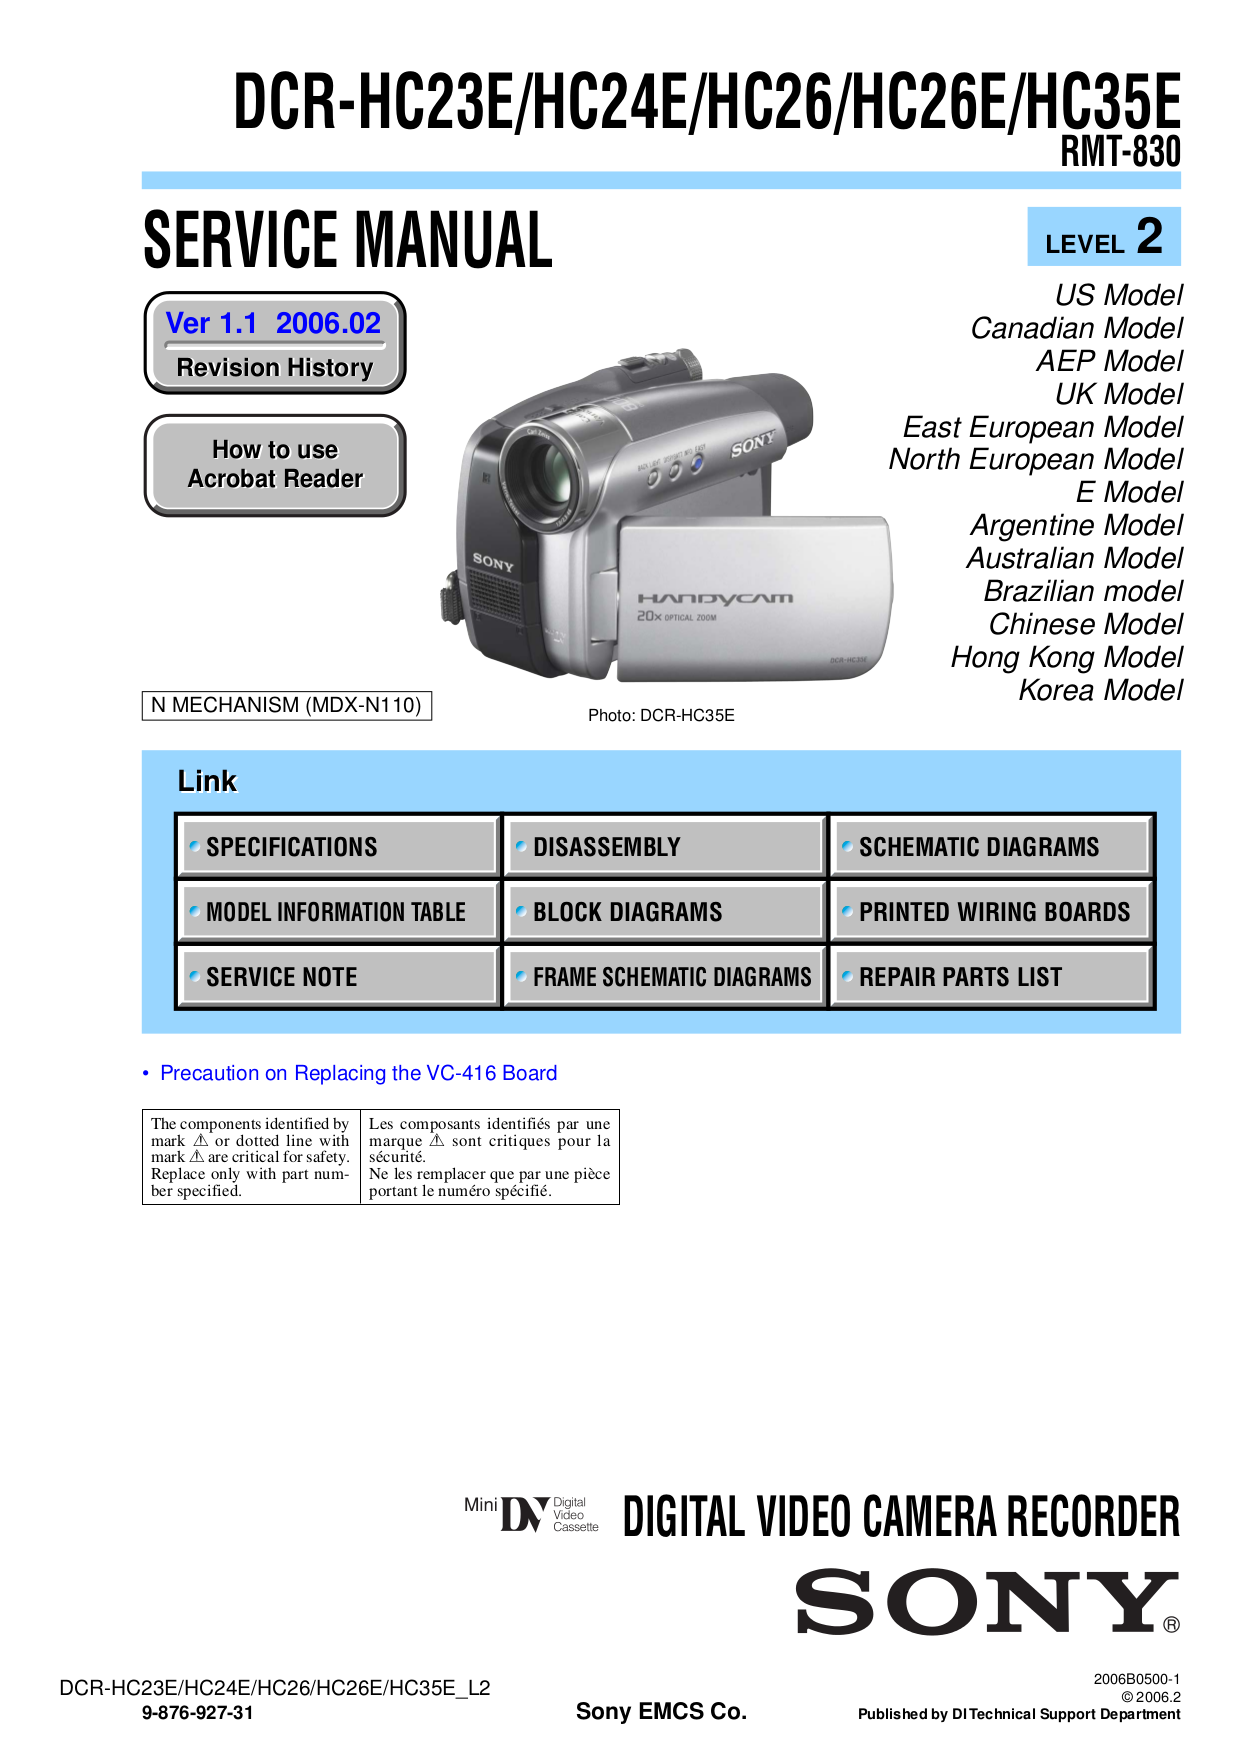 Инструкция На Видео Камеру Sony Hdv-888.Rar